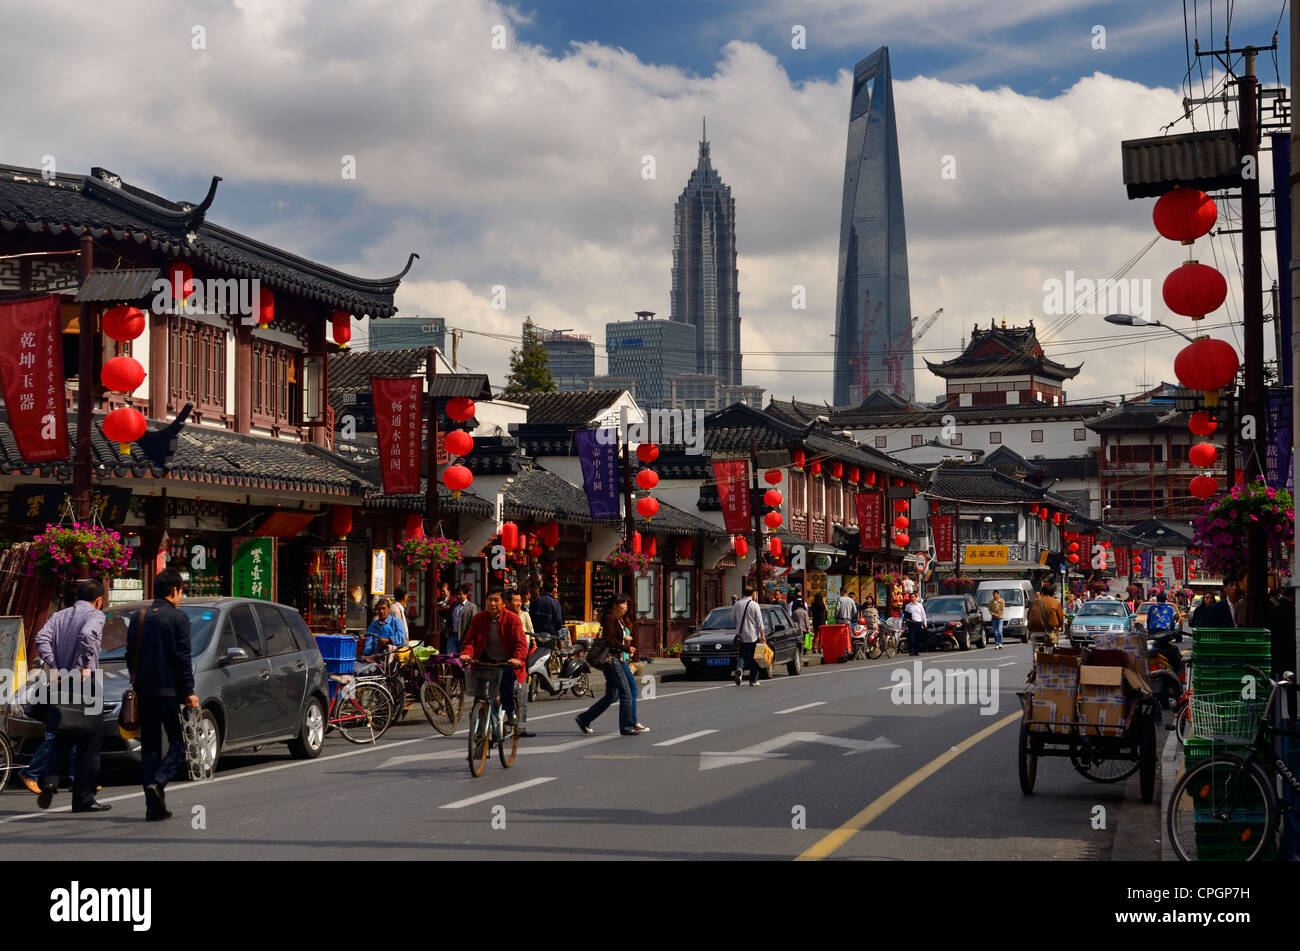 FangBang Zhong Straße mit Geschäften und finanzielle Türme in Hangpu District Shanghai Peoples Republic Of China Stockfoto